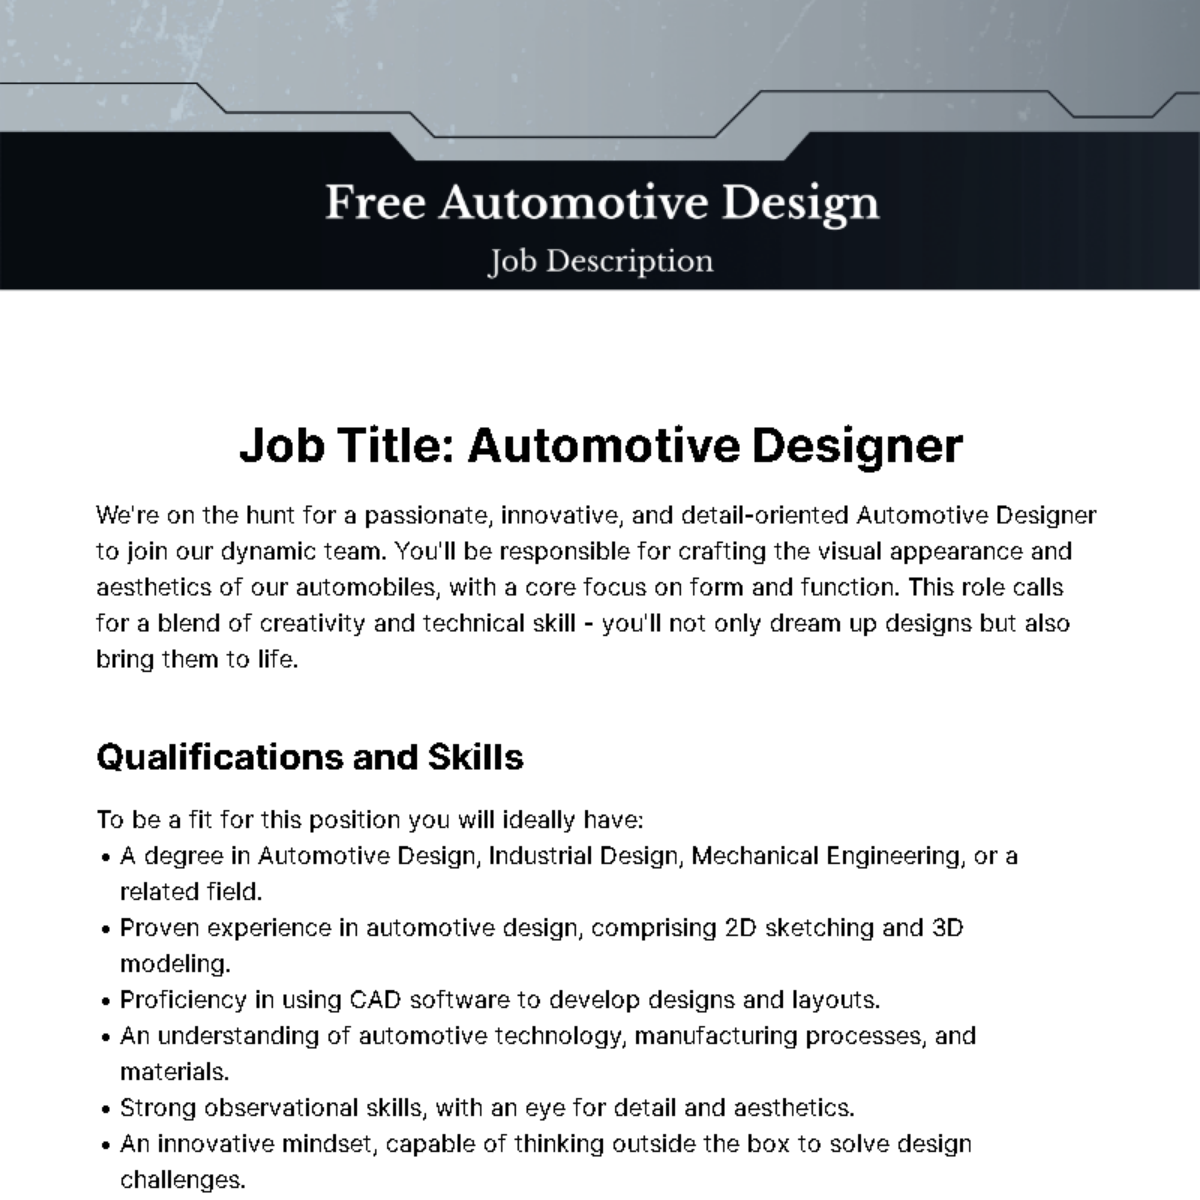 Free Automotive Design Job Description Template